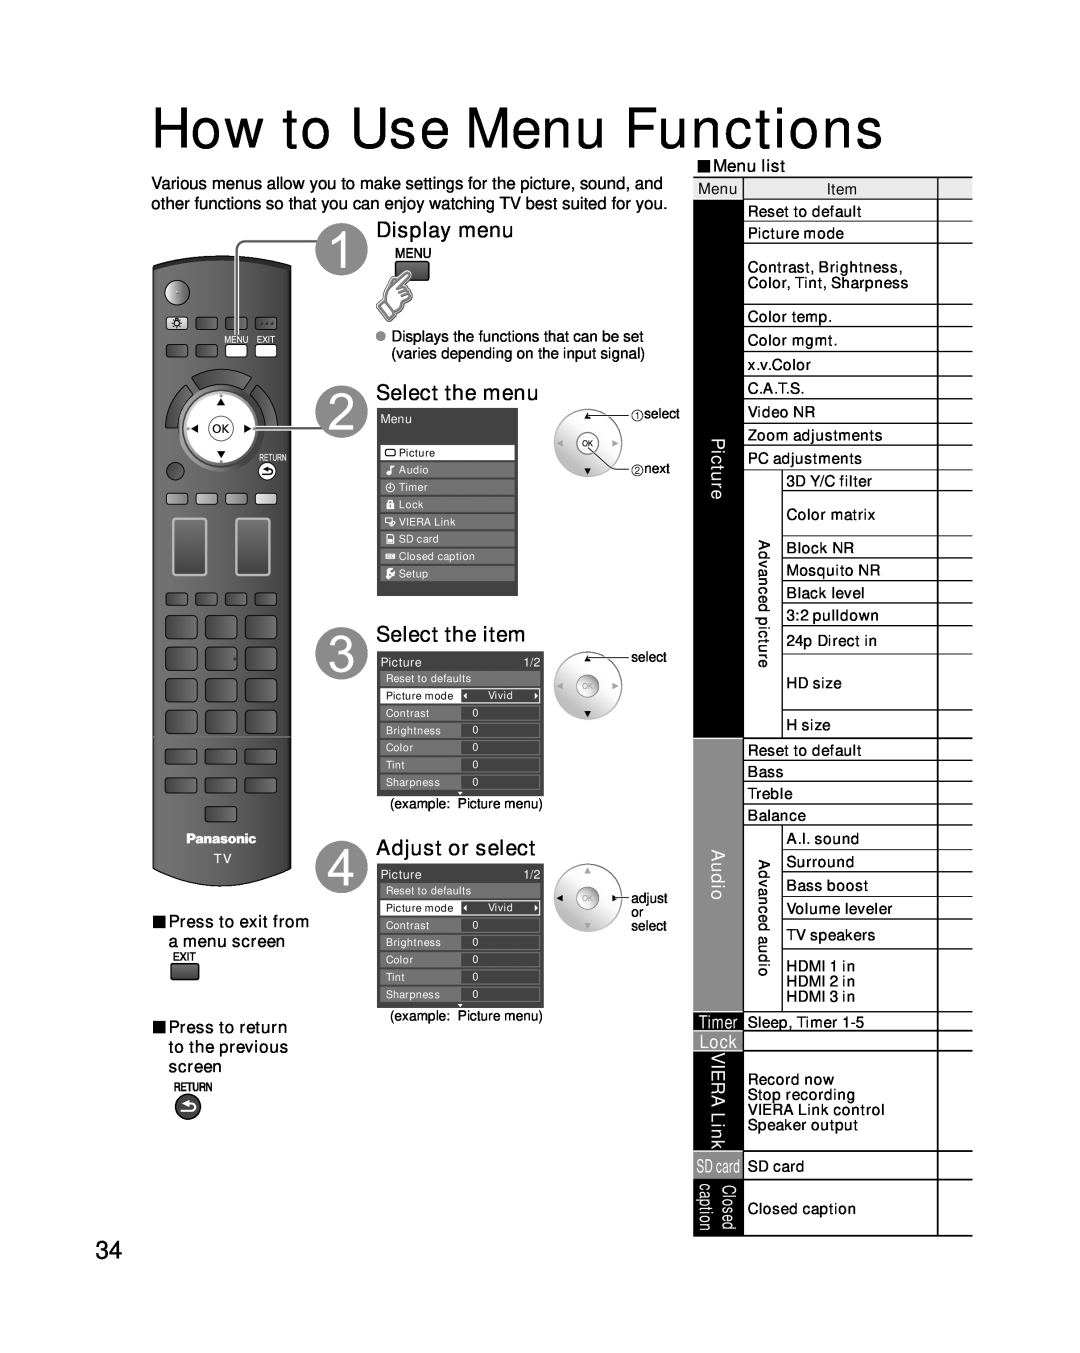 Panasonic TC-P46G10 How to Use Menu Functions, Display menu, Select the menu, Select the item, Adjust or select, Audio 